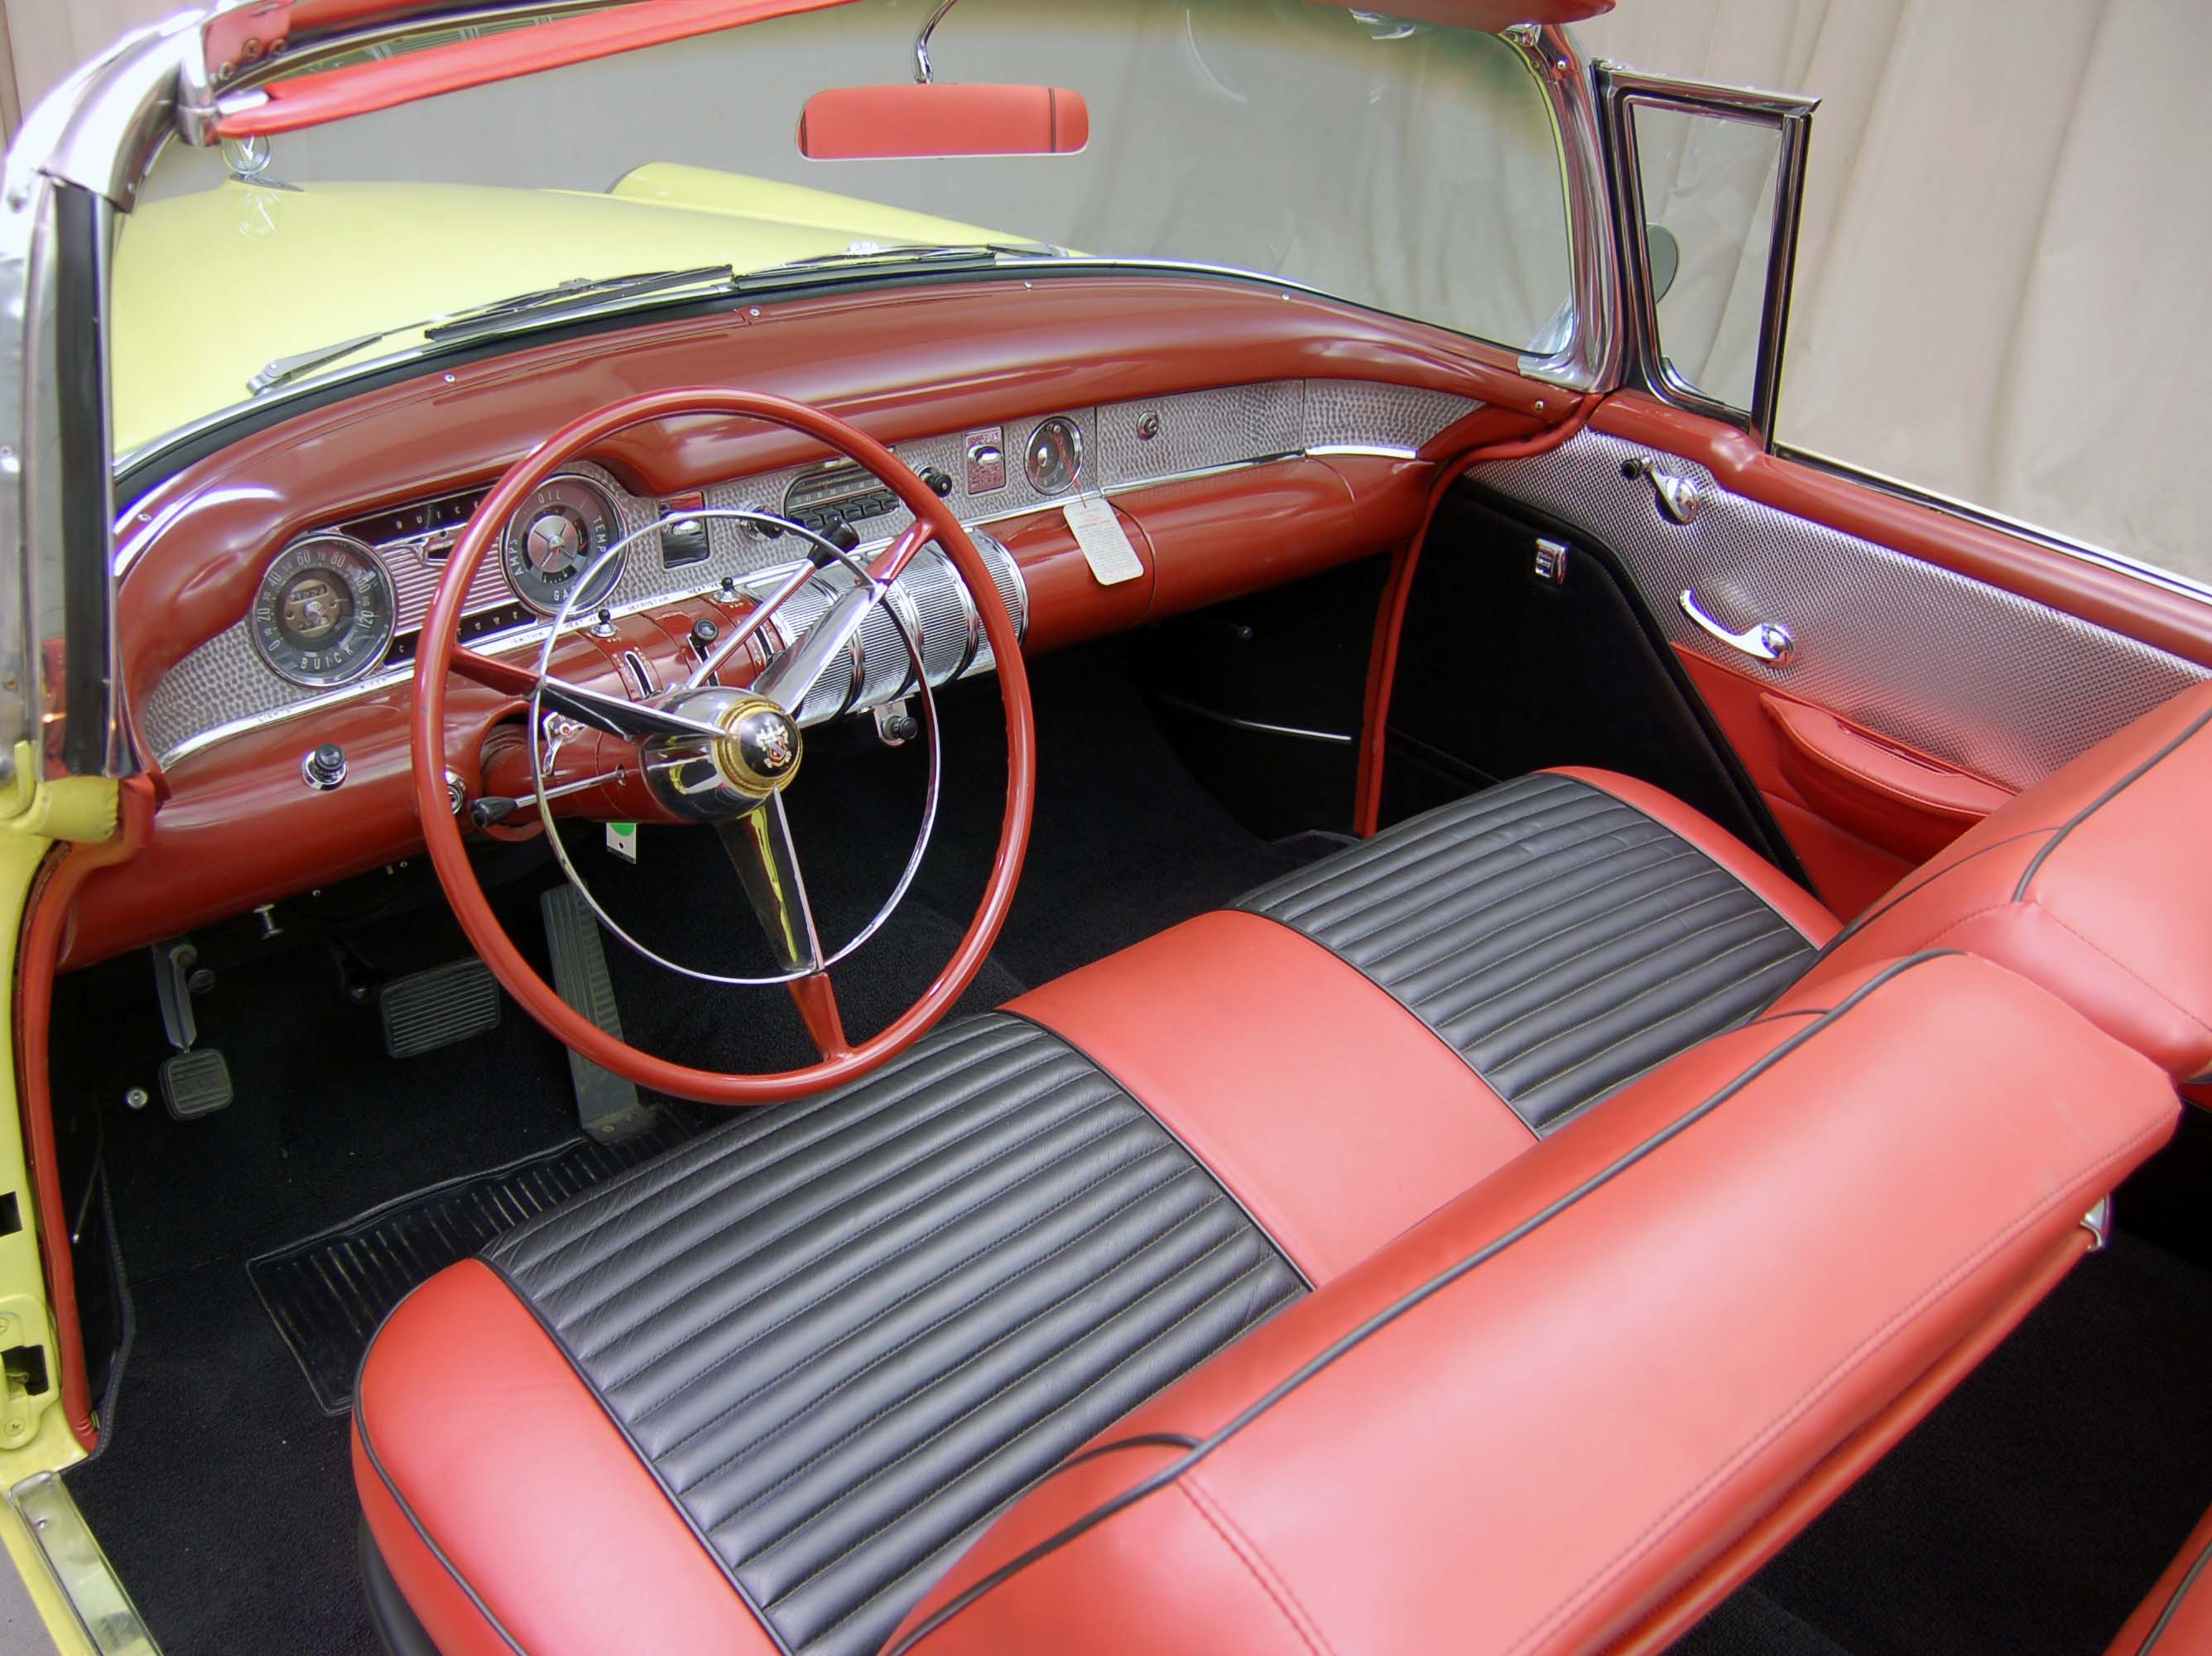 1958 buick century model 66r